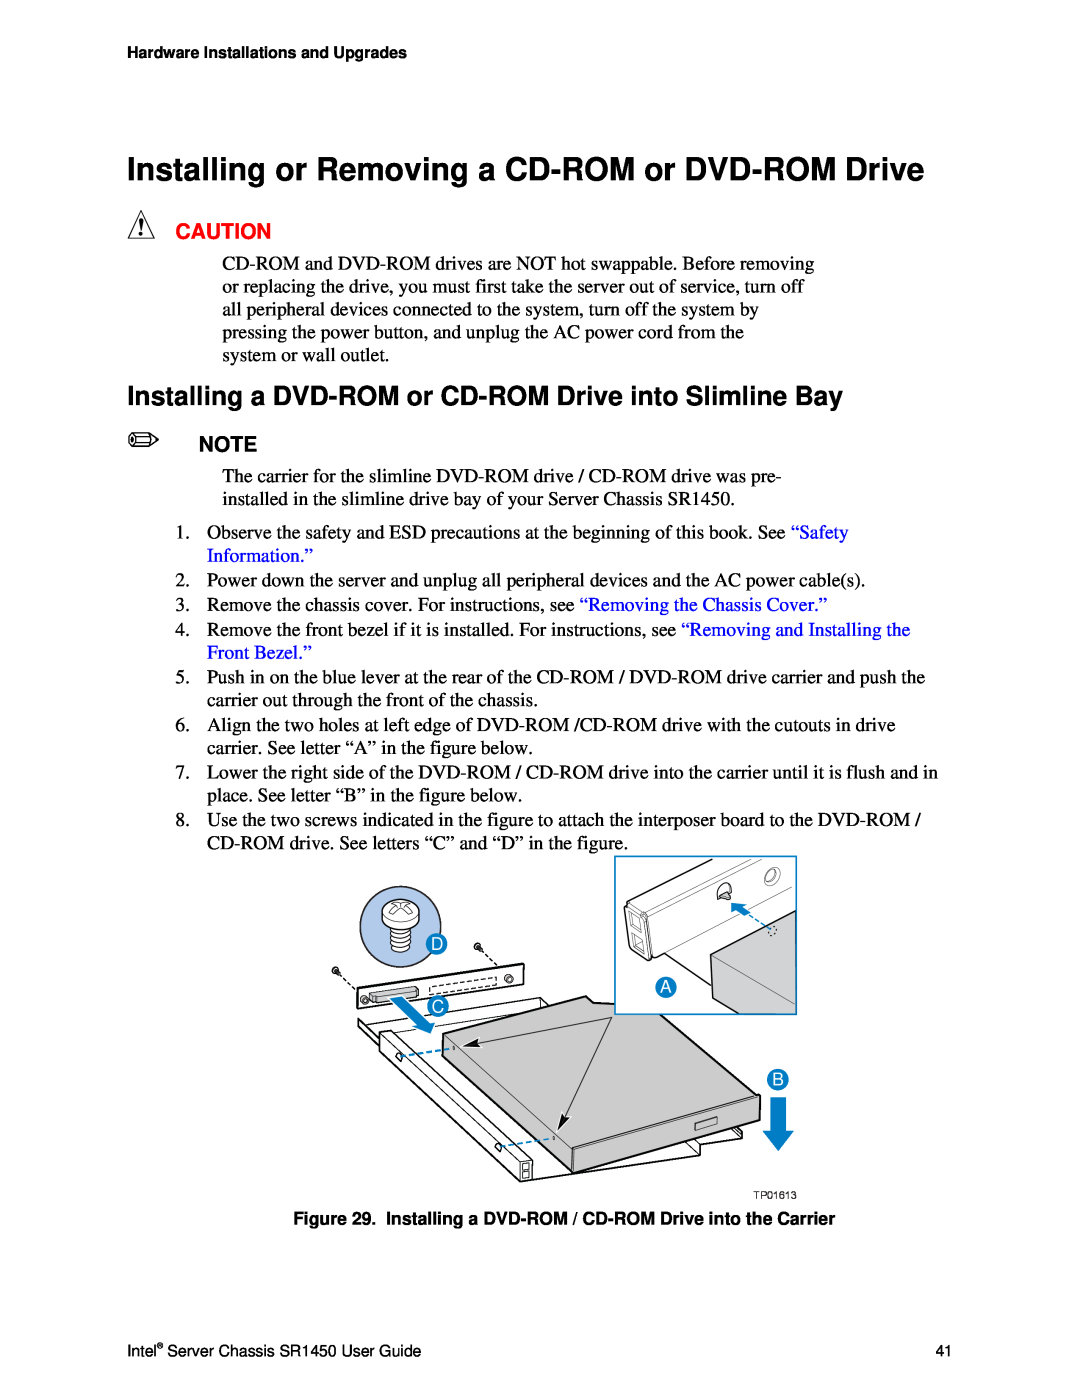 Intel SR1450 manual Installing or Removing a CD-ROMor DVD-ROMDrive 